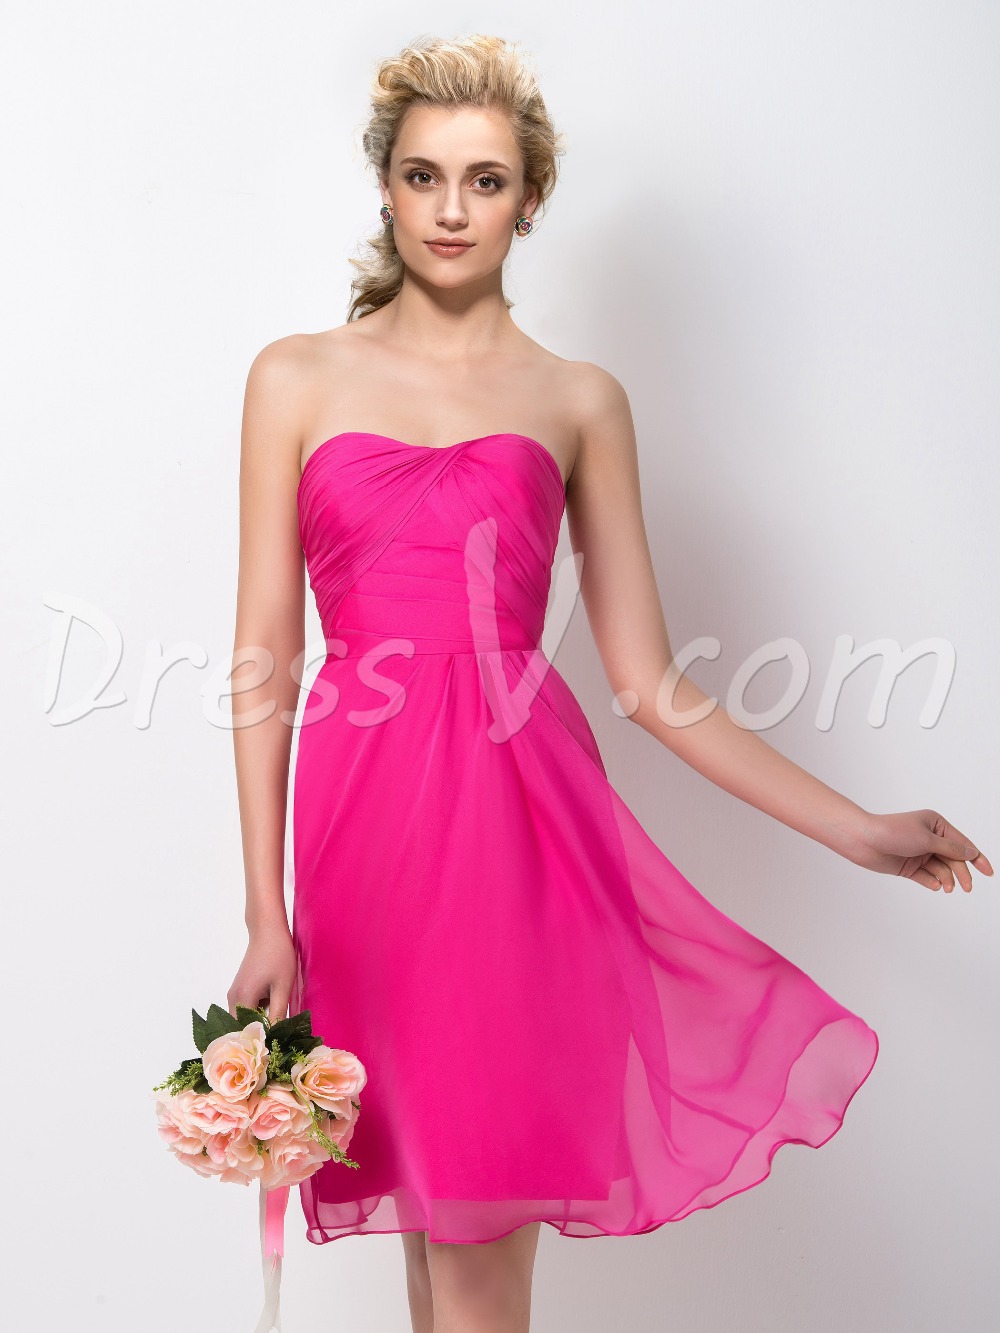 Bright Pink Dresses